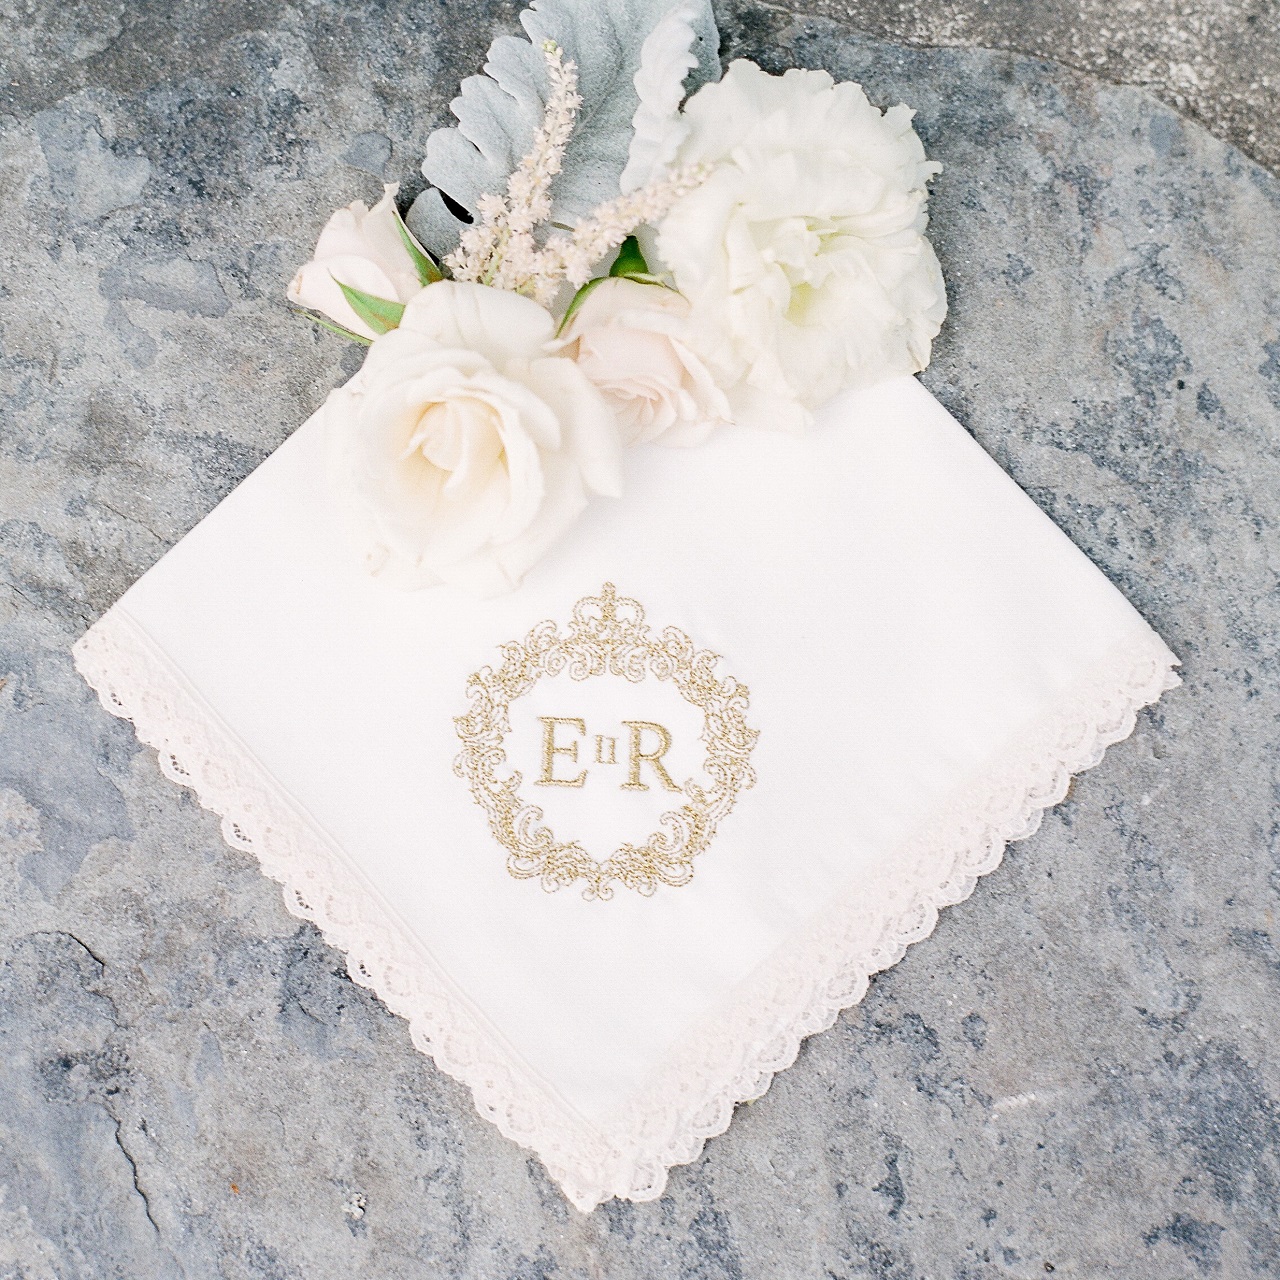 Custom embroidered wedding monogram on ivory handkerchief in gold thread.